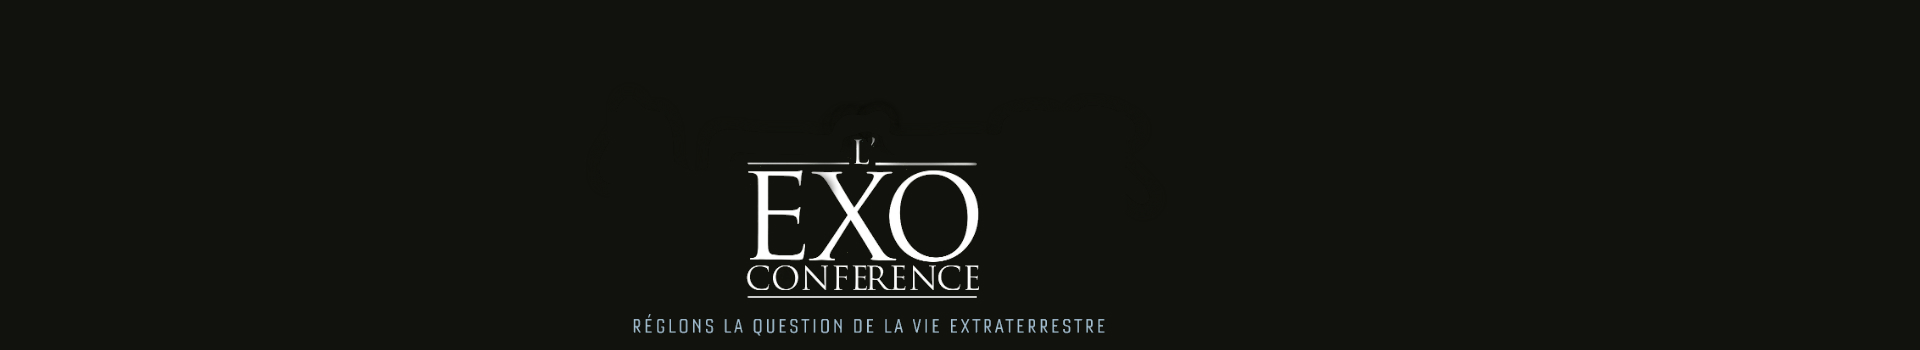 Alexandre Astier L'Exoconference tickets London